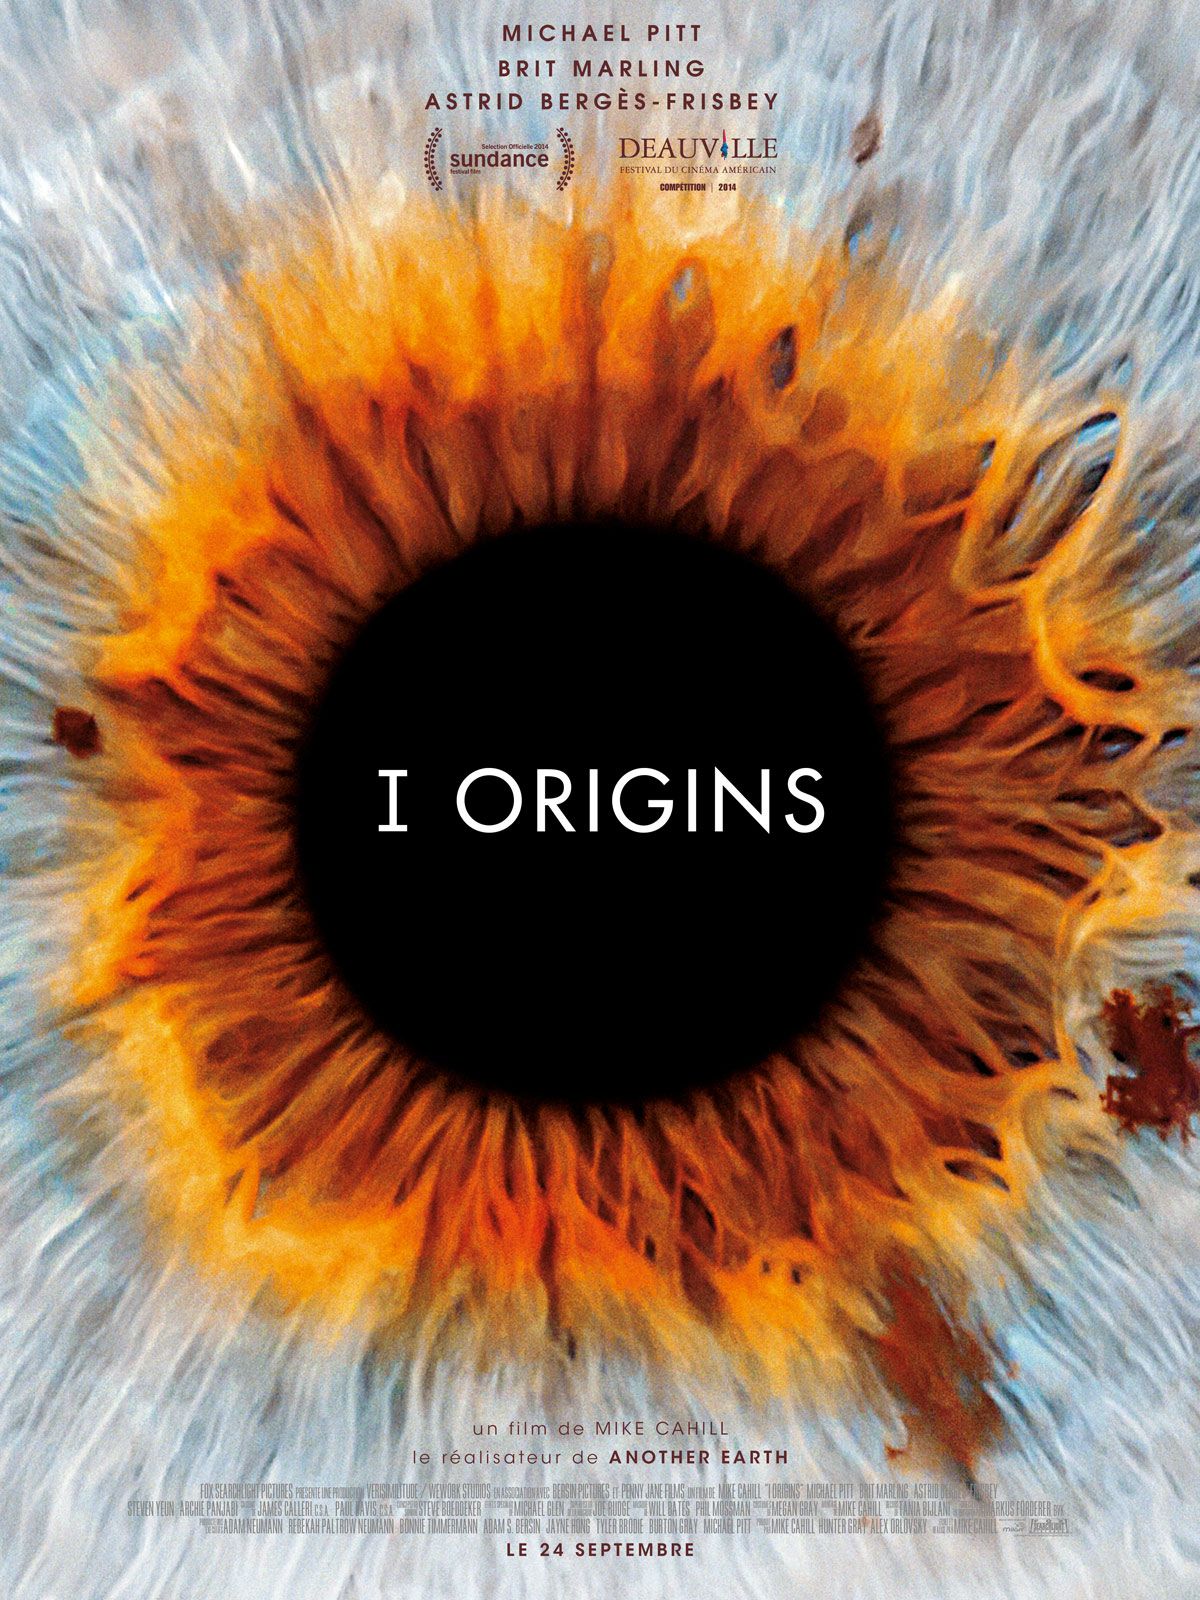 I Origins - Film (2014) streaming VF gratuit complet